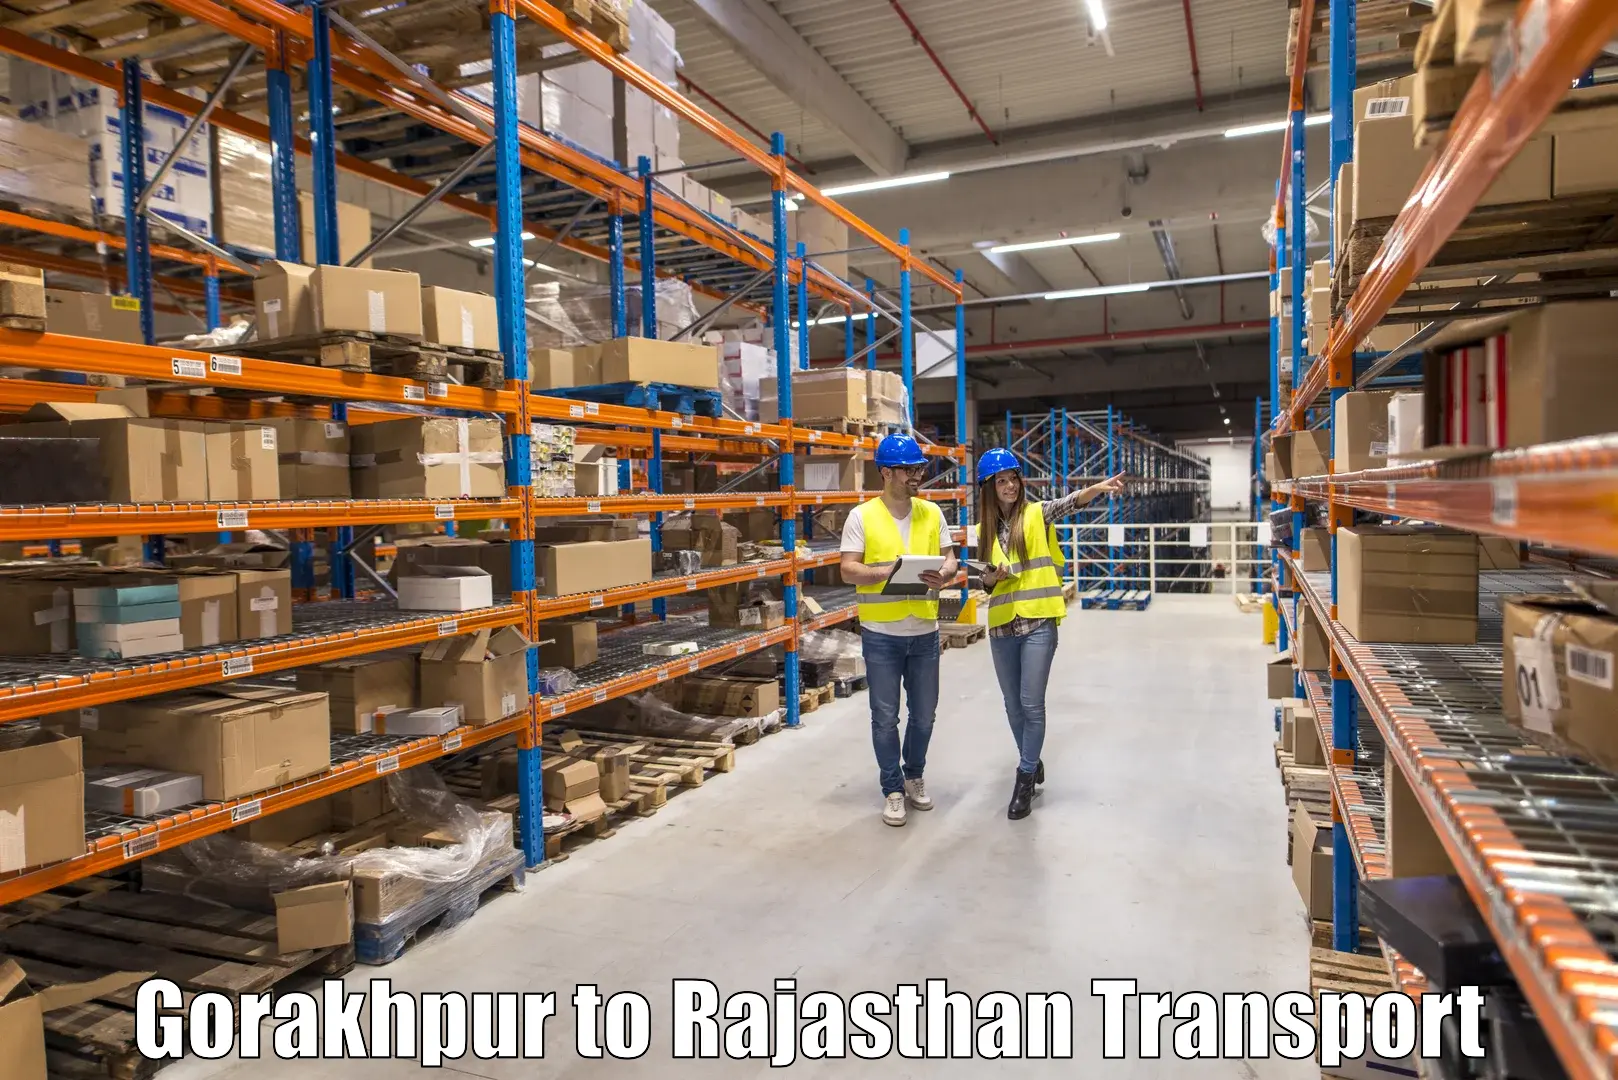 Shipping partner Gorakhpur to Anupgarh